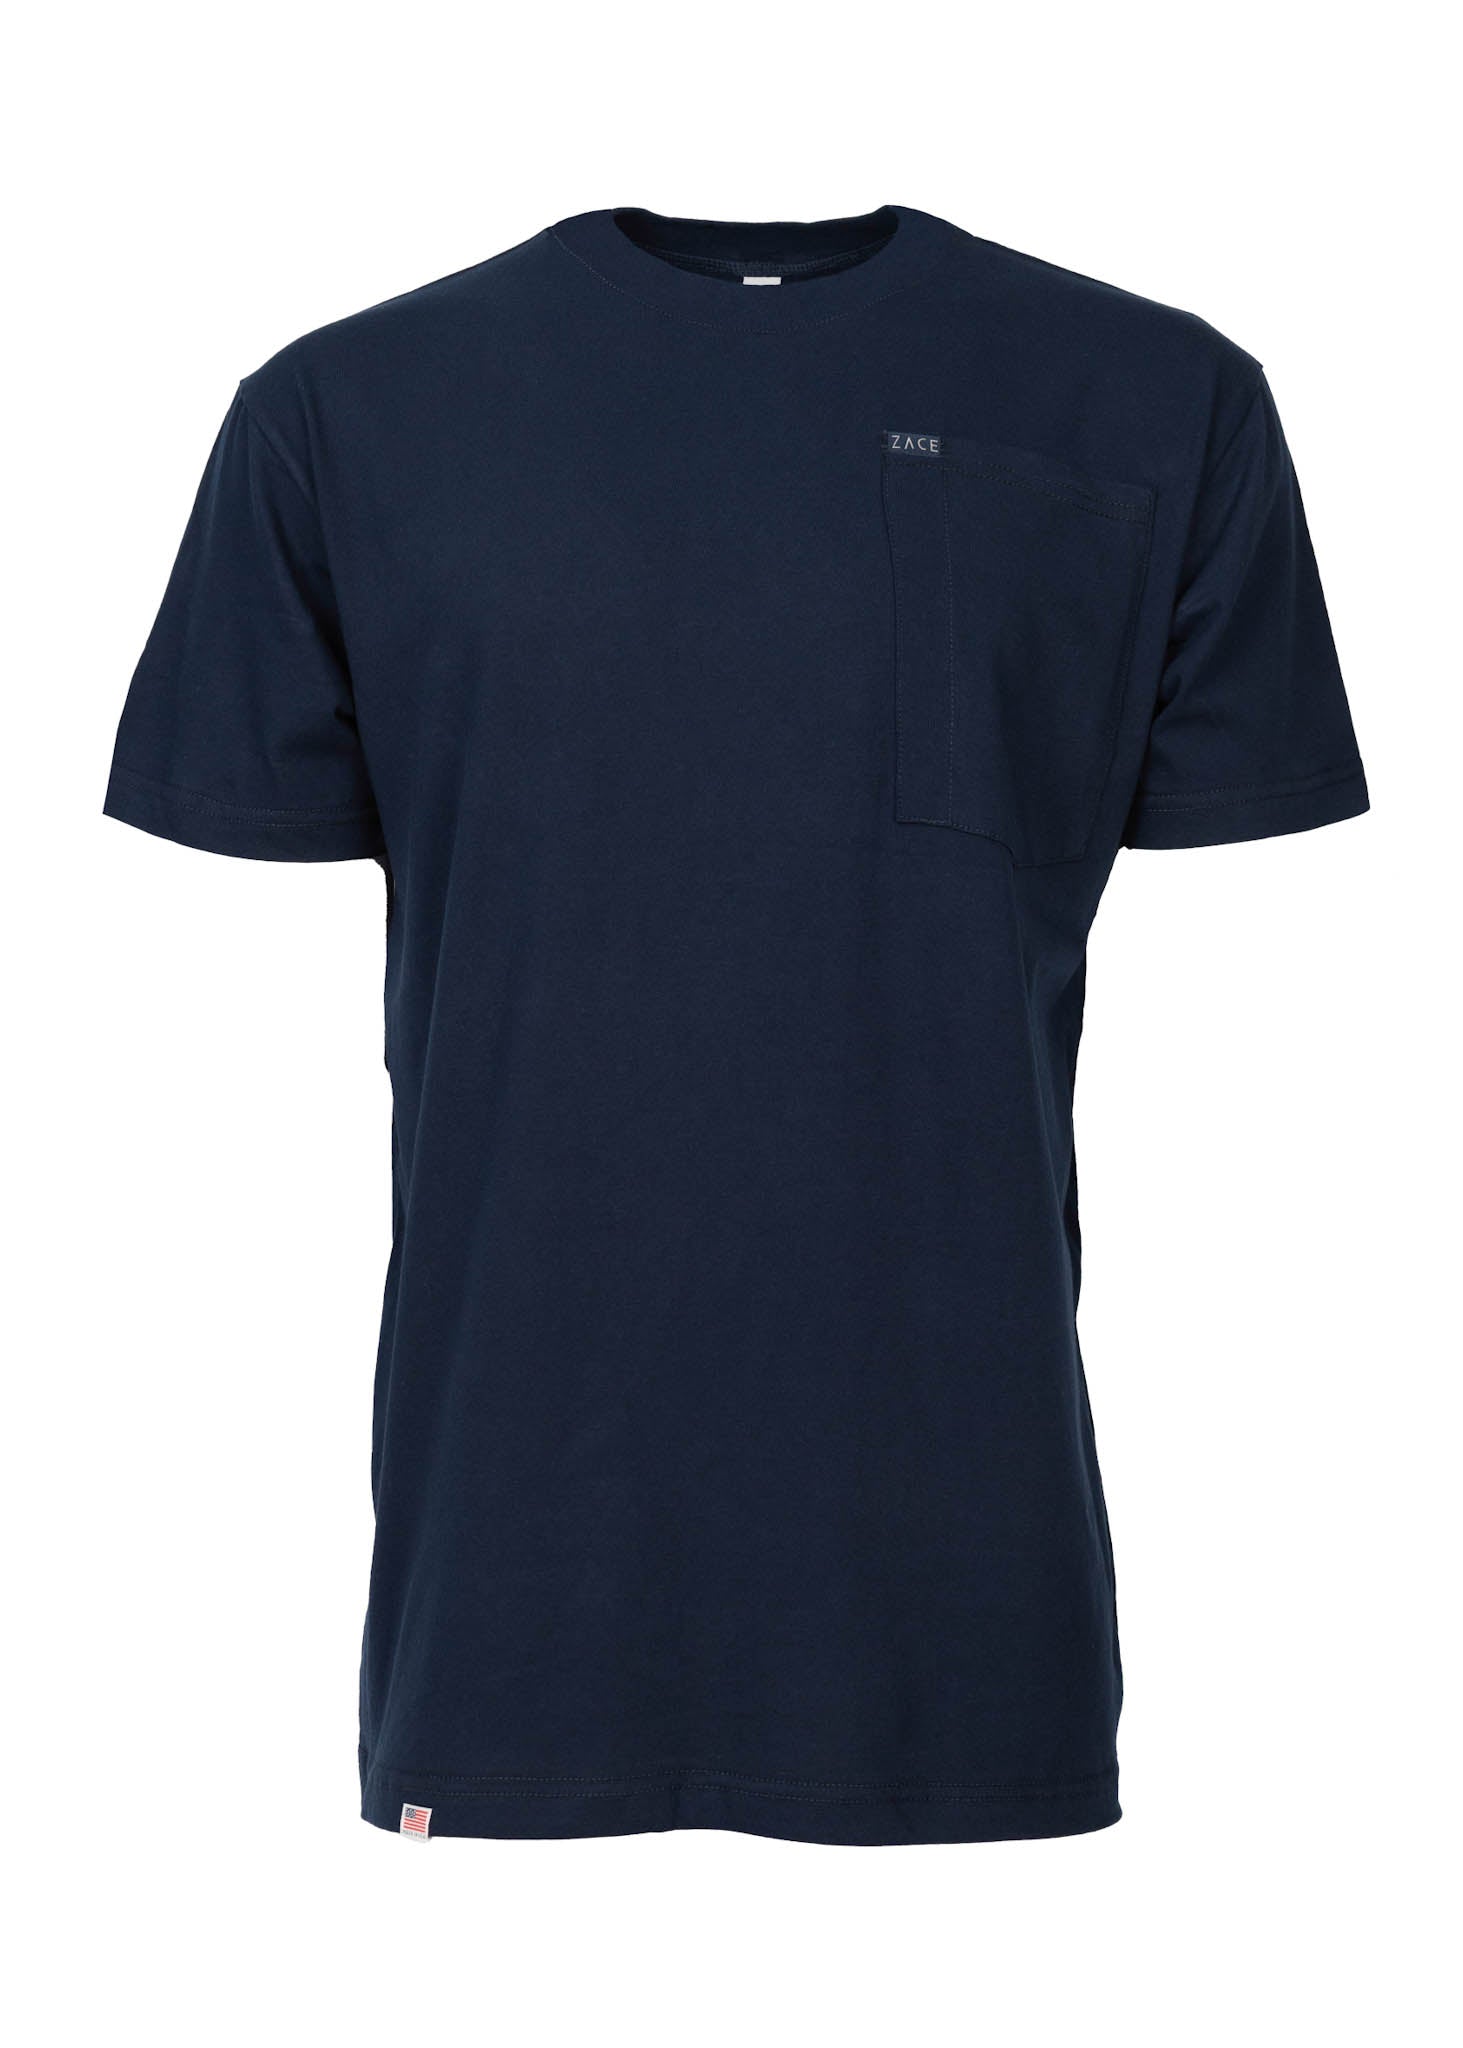 Short Sleeve Patch Pocket Tee Shirt Navy